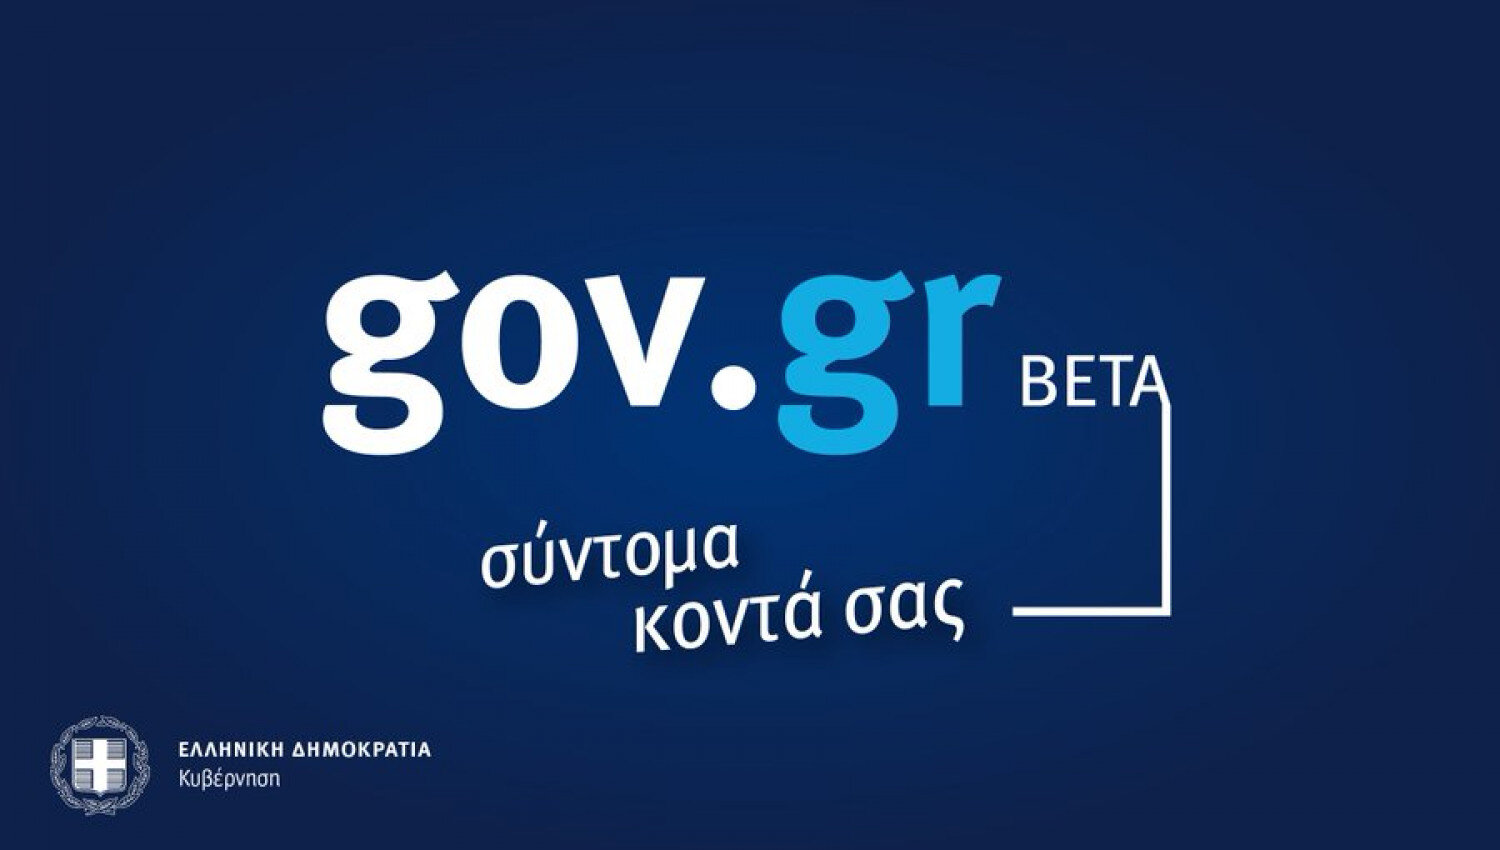 More information about "www.gov.gr είναι η νέα διαδικτυακή πύλη του ελληνικού κράτους"